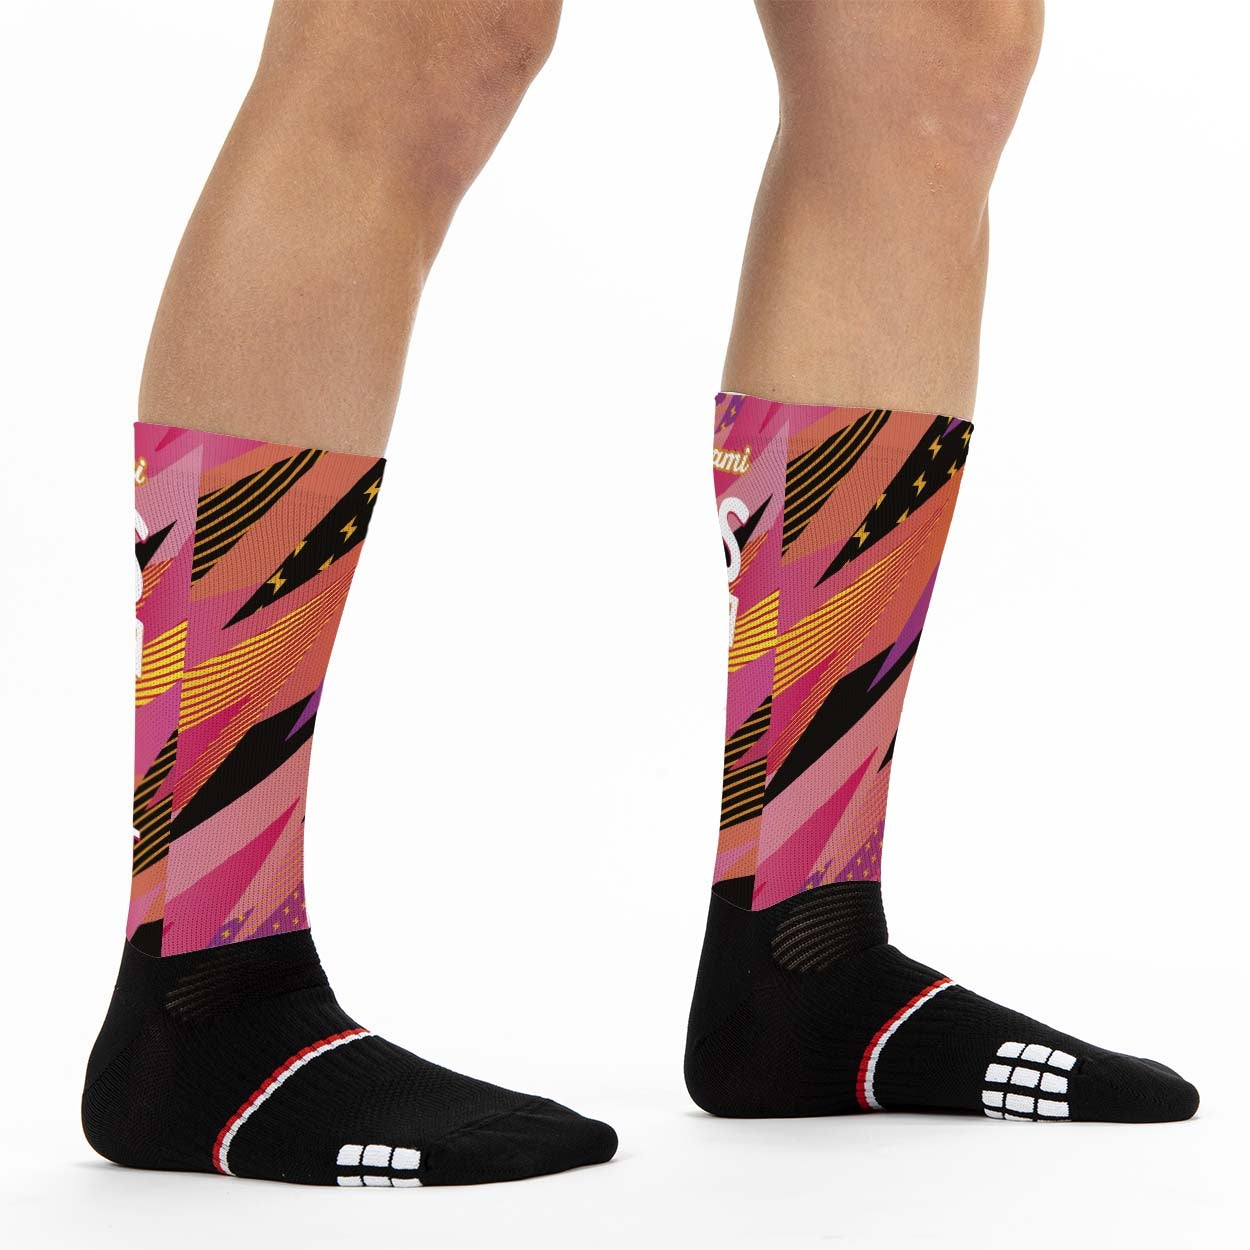 socks_sports_running_cycling_original_colorful_pink_made_in_france_kiwami_sports